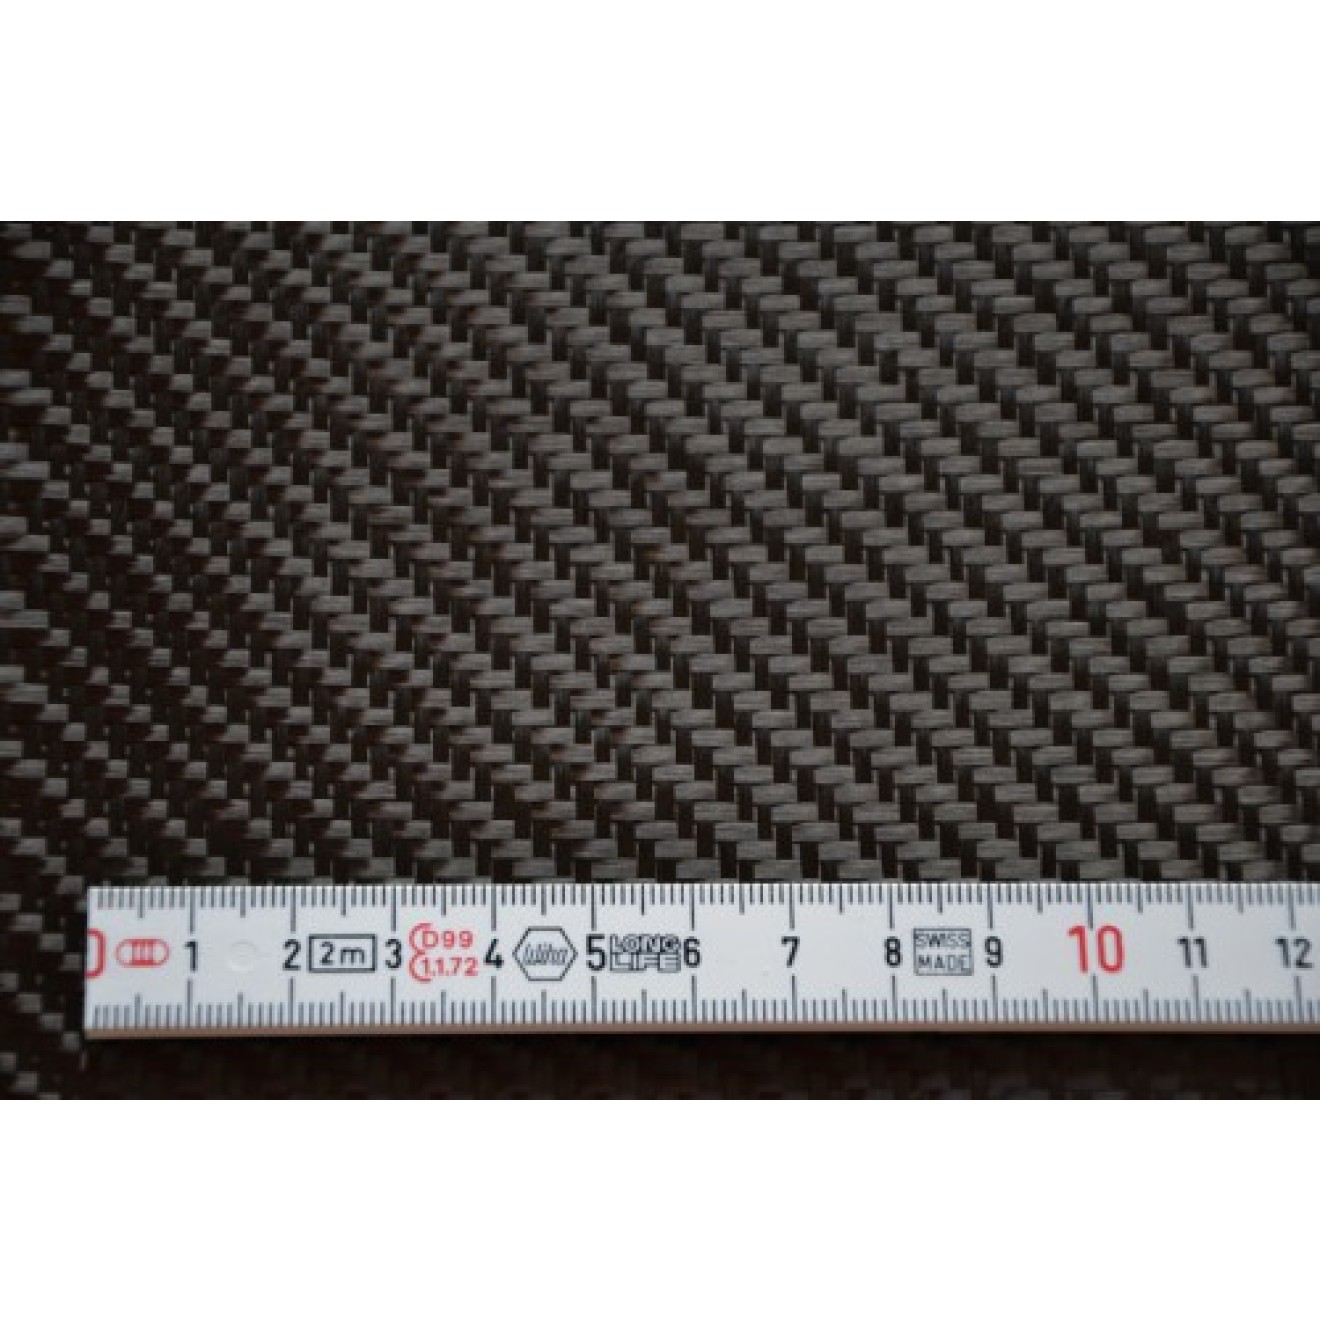 Woven carbon fiber fabric 3K 200g/m² twill2/2